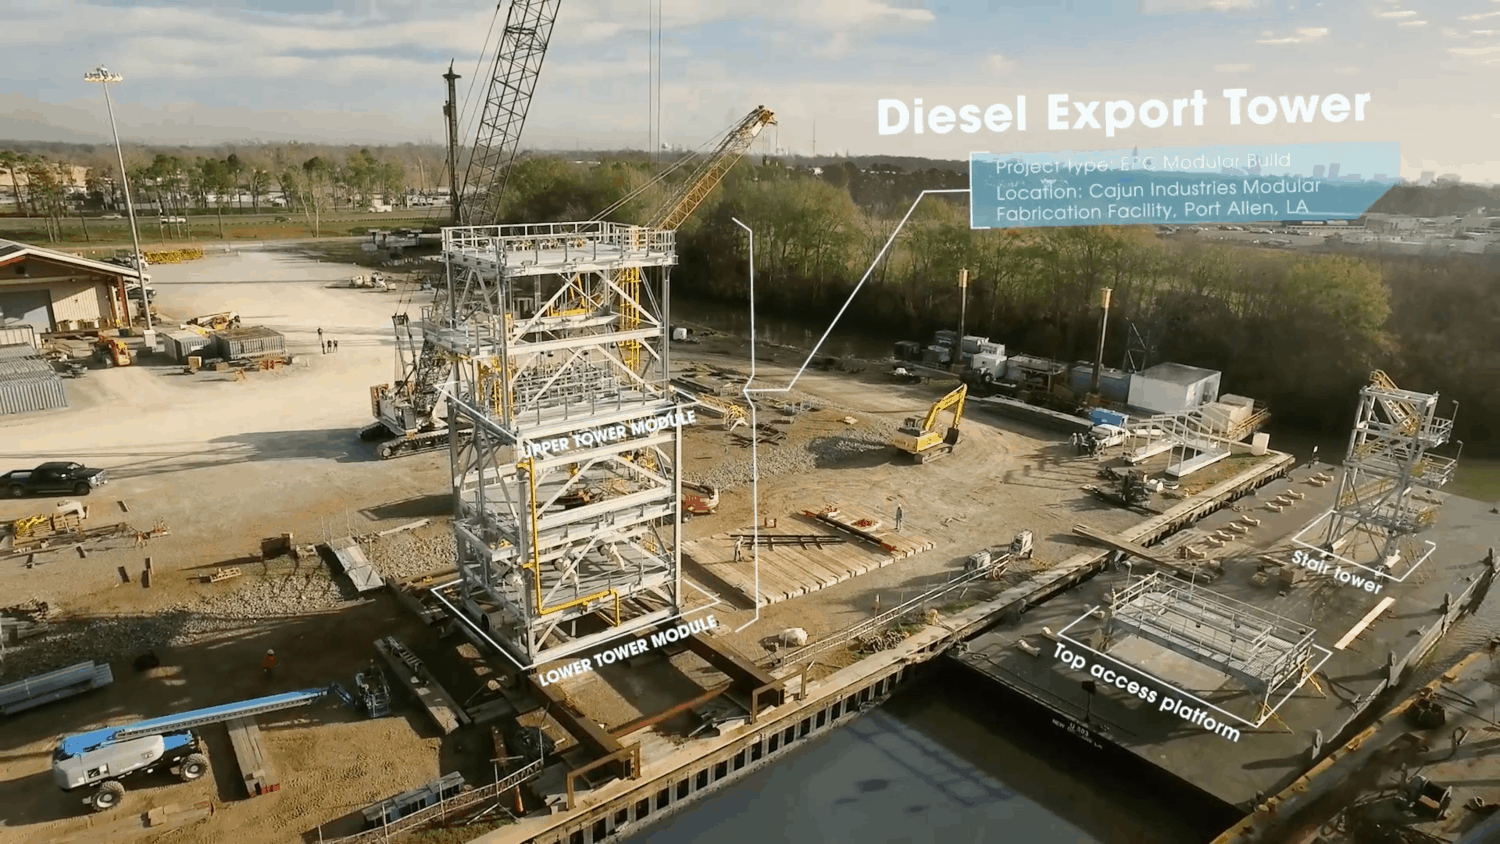 Diesel Export Tower on Cajun Industries Modular Fabrication Facility